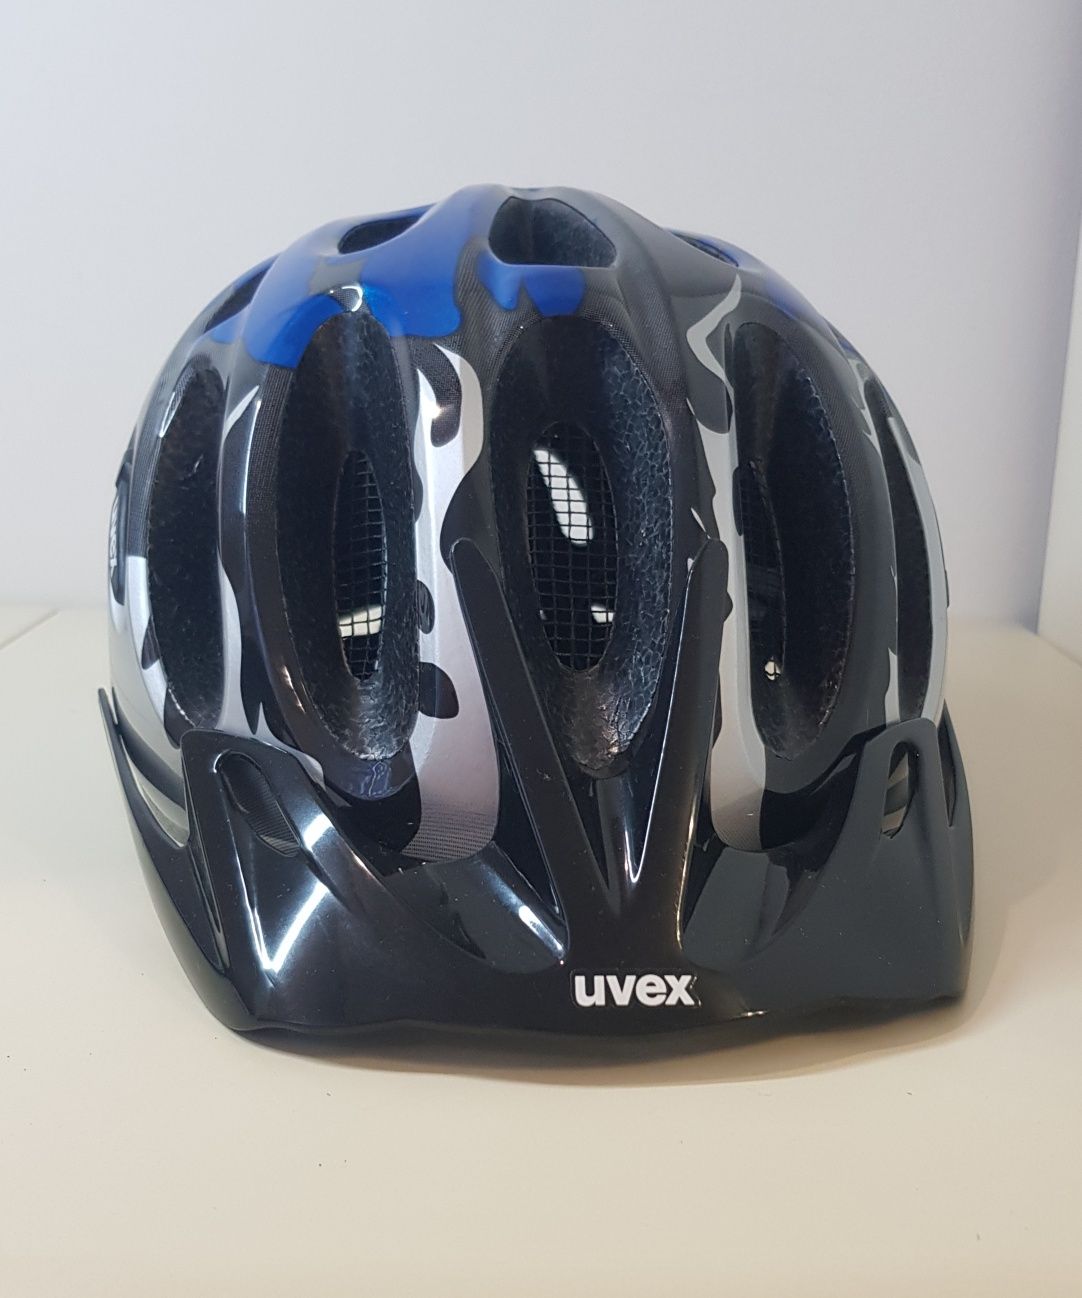 Велошлем Uvex Германия шлем Оригинал размер 52-57 см велошолом